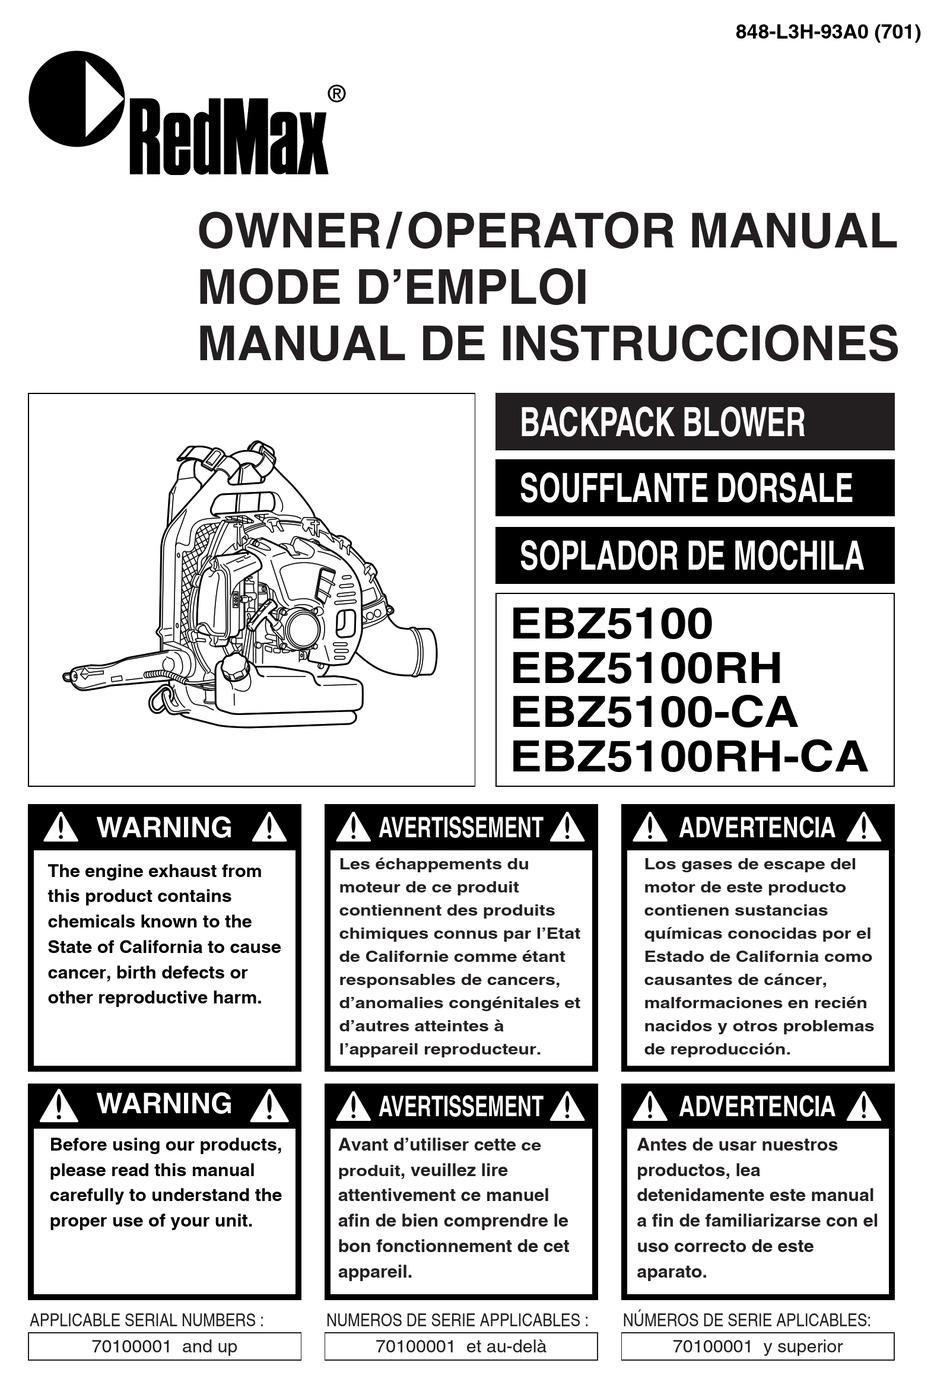 Spanish French English Manual: RedMax EBZ5150 Owner Operator Manual 